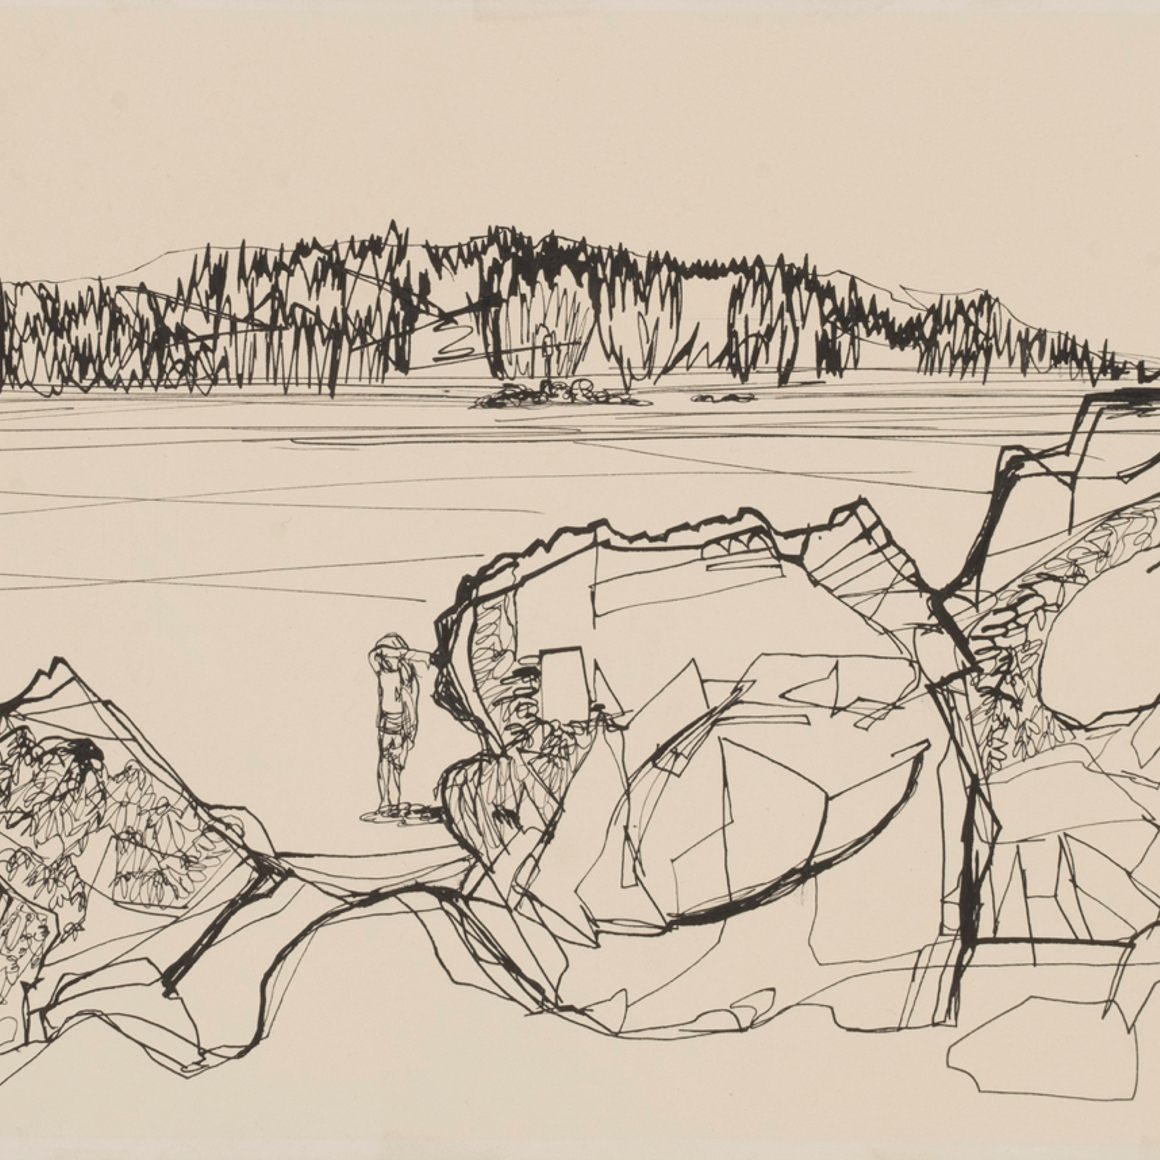 Jane Hamilton Hovde, Figure in Landscape, 1968. Ink on paper. Henry Art Gallery, University of Washington, Seattle, gift of Katherine and Karin Hovde, daughters of the artist, 2018.330. © The Estate of Jane Hamilton Hovde.